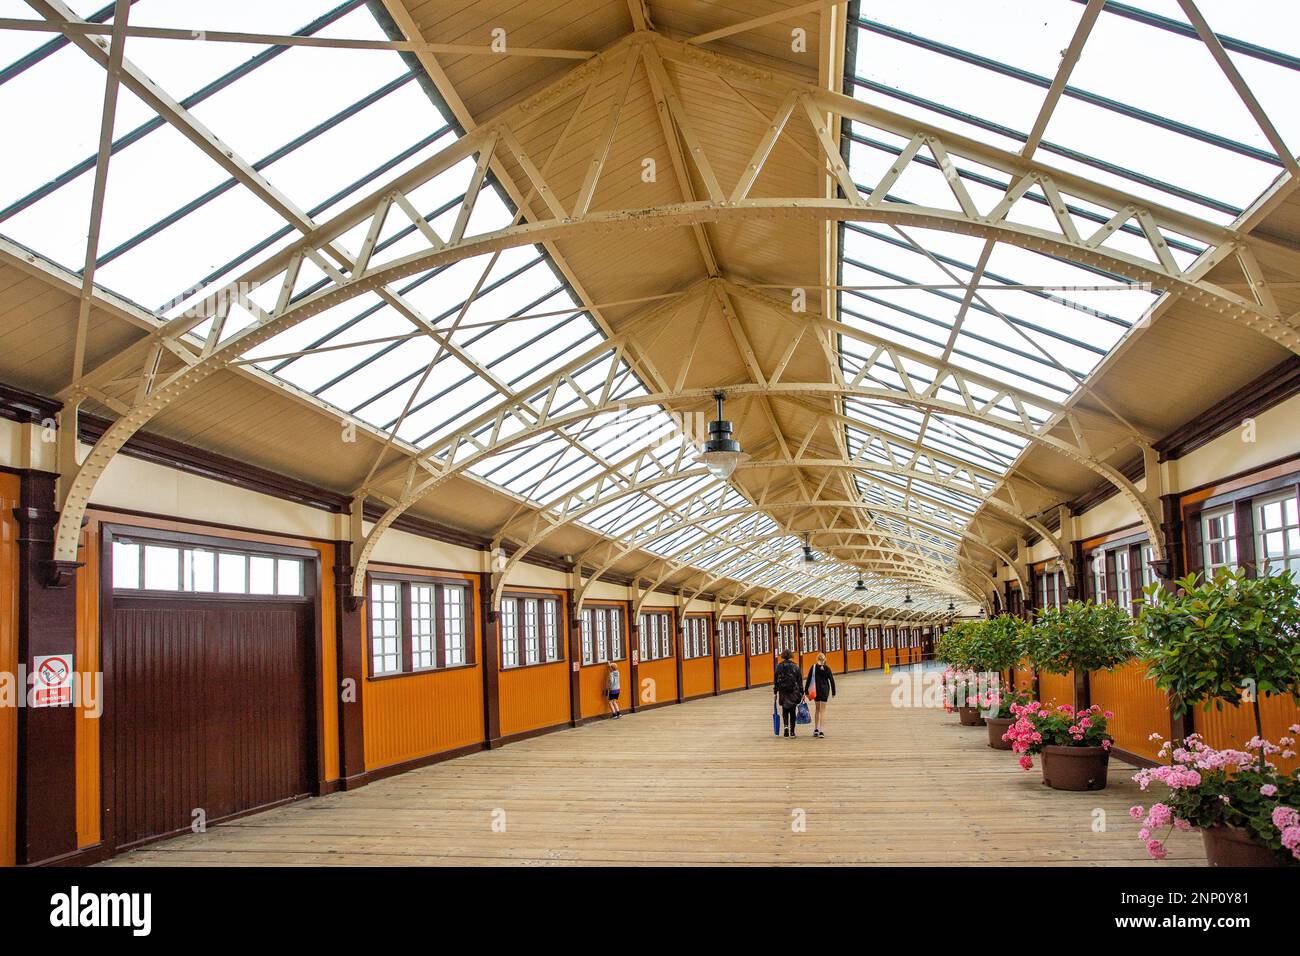 Wemyss Bay train Station Interior, Écosse, Royaume-Uni Banque D'Images